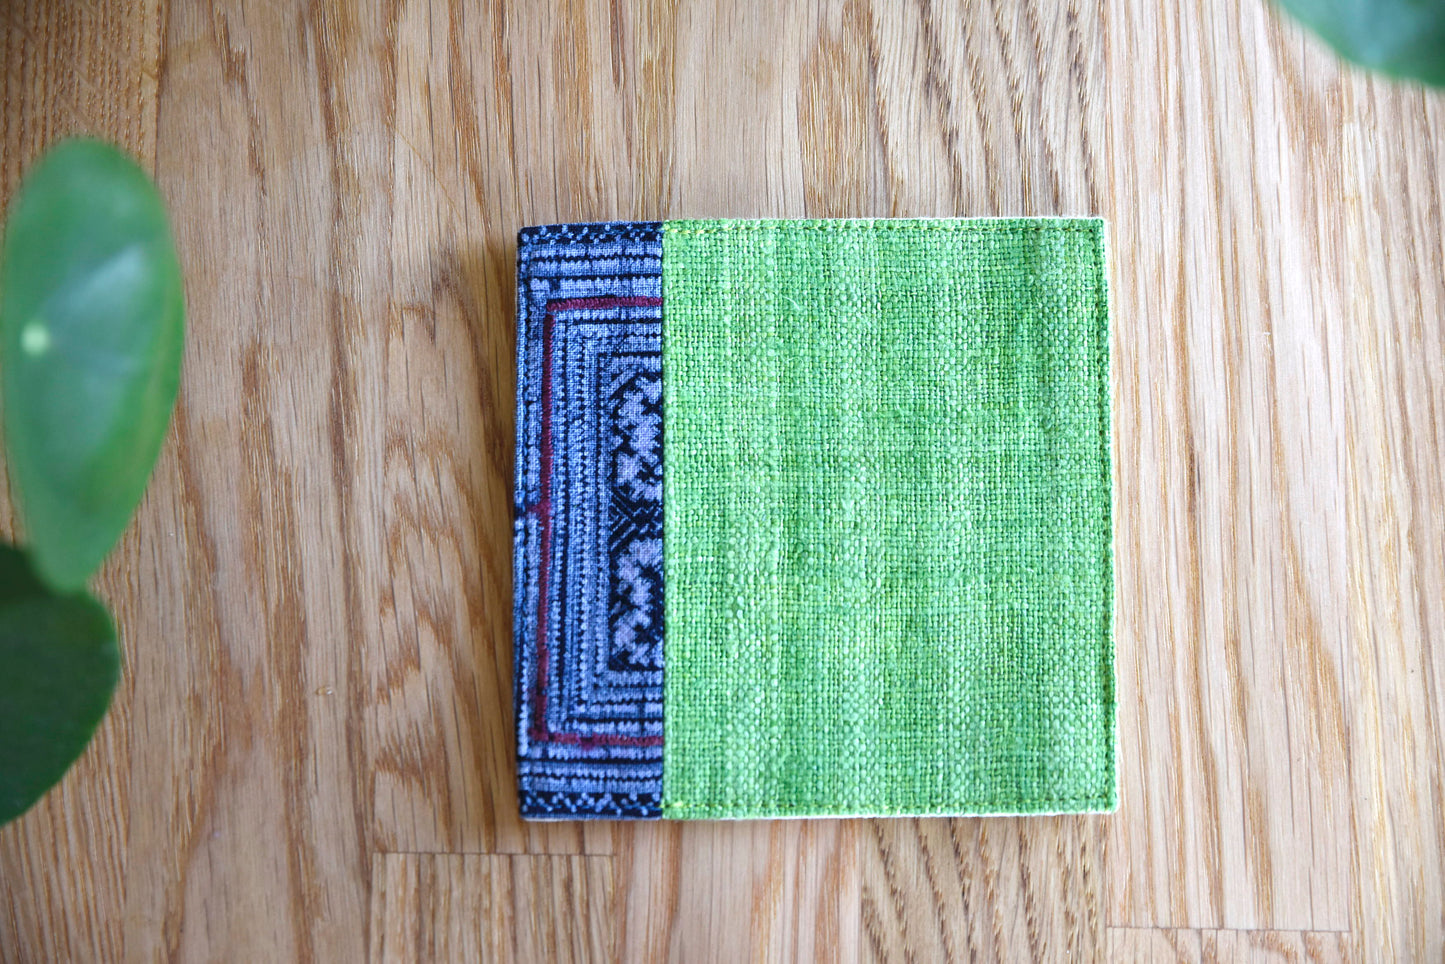 Green hemp coaster, Vintage H'mong fabric, natural-dyed coaster